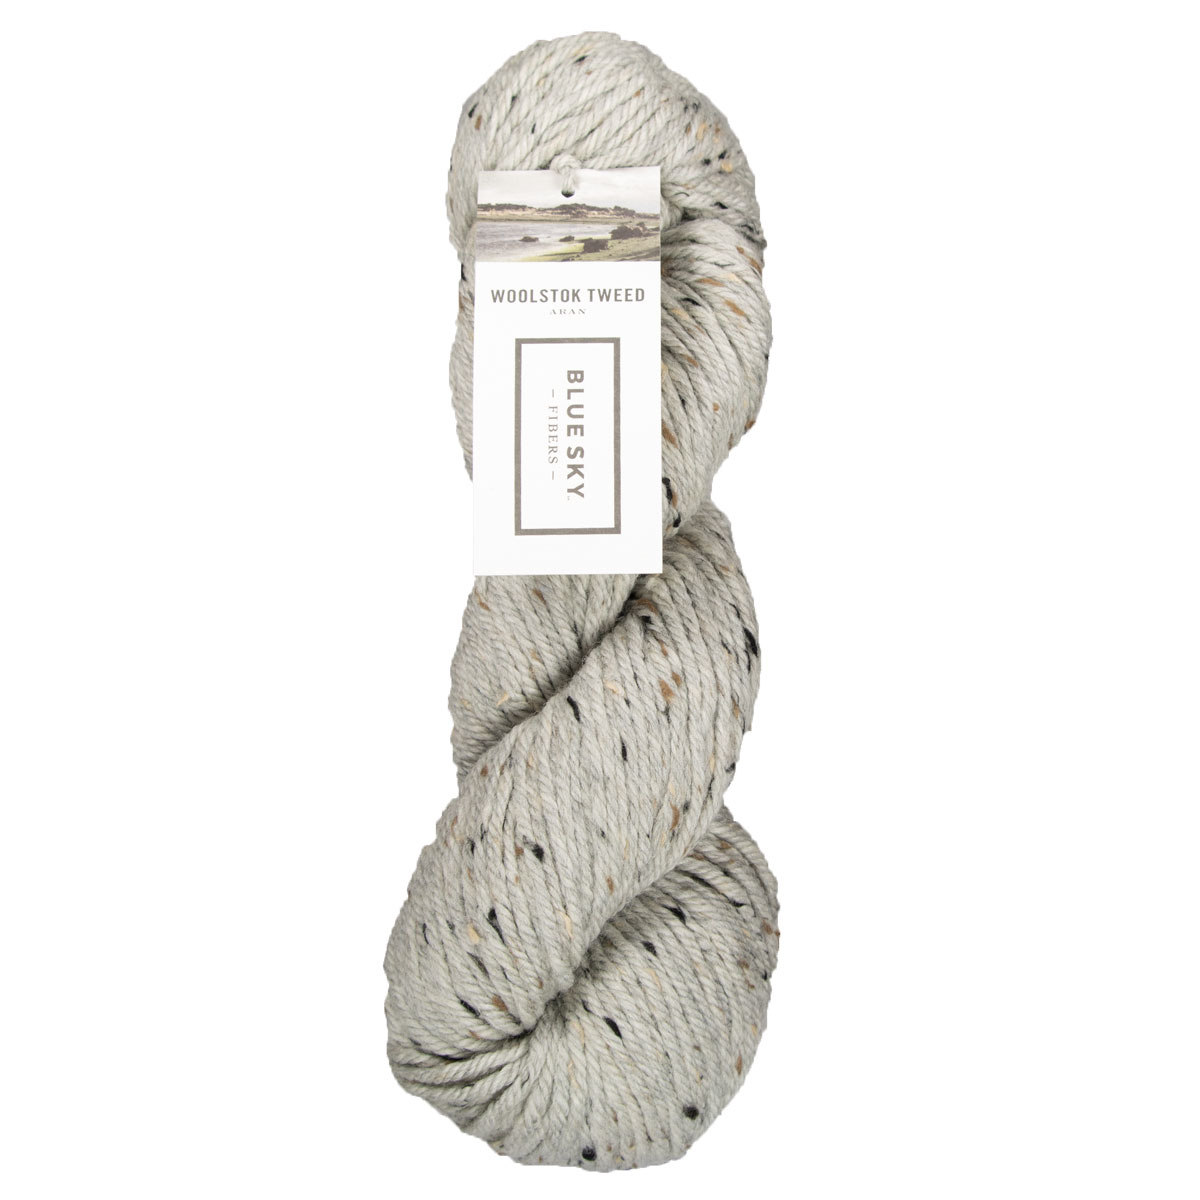 Blue Sky Fibers Woolstok Tweed (Aran) Yarn - 3302 Silver Birch at